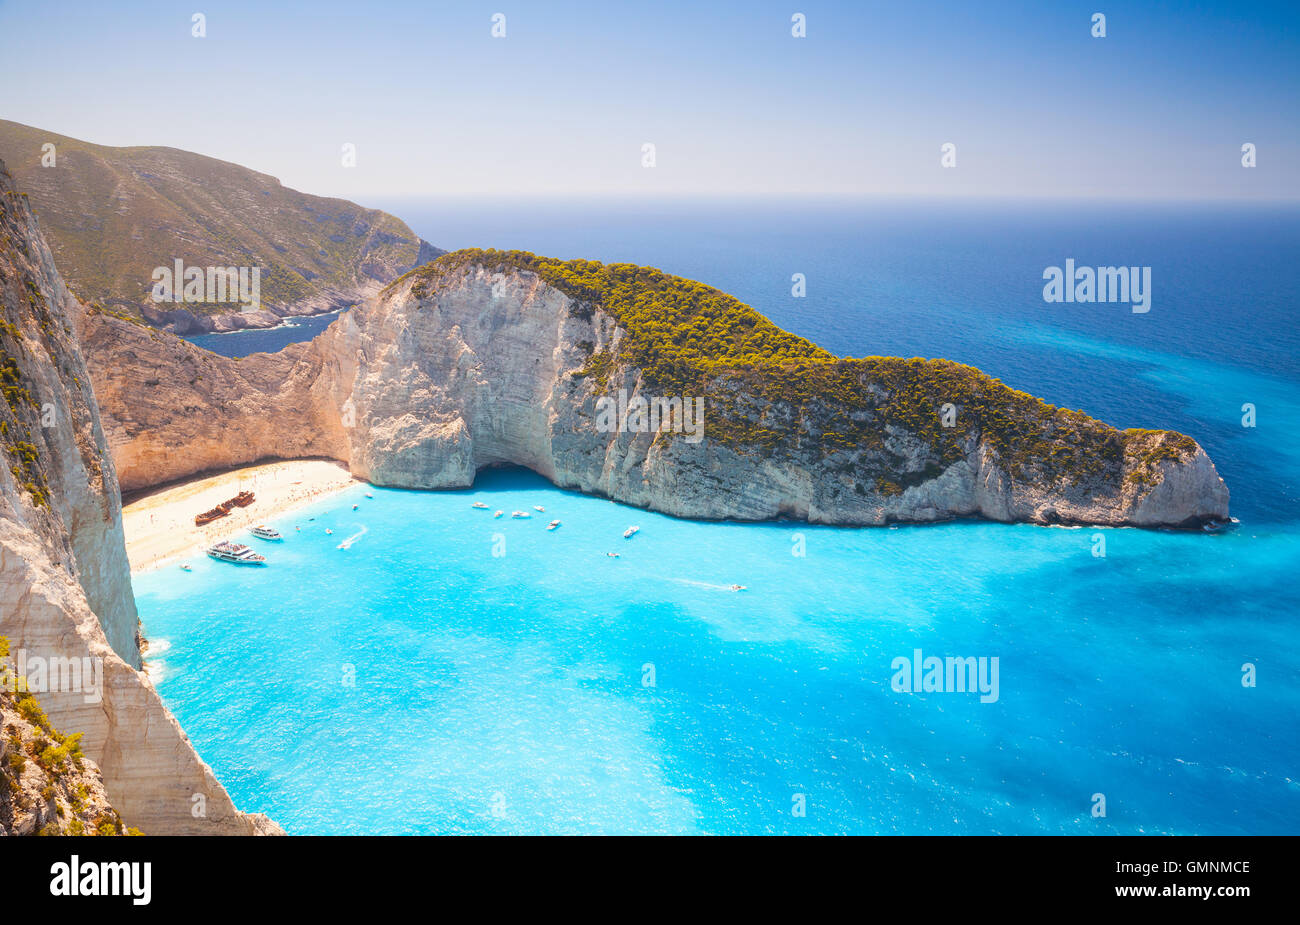 Navagio beach. The most famous landmark of Greek island Zakynthos in the Ionian Sea Stock Photo